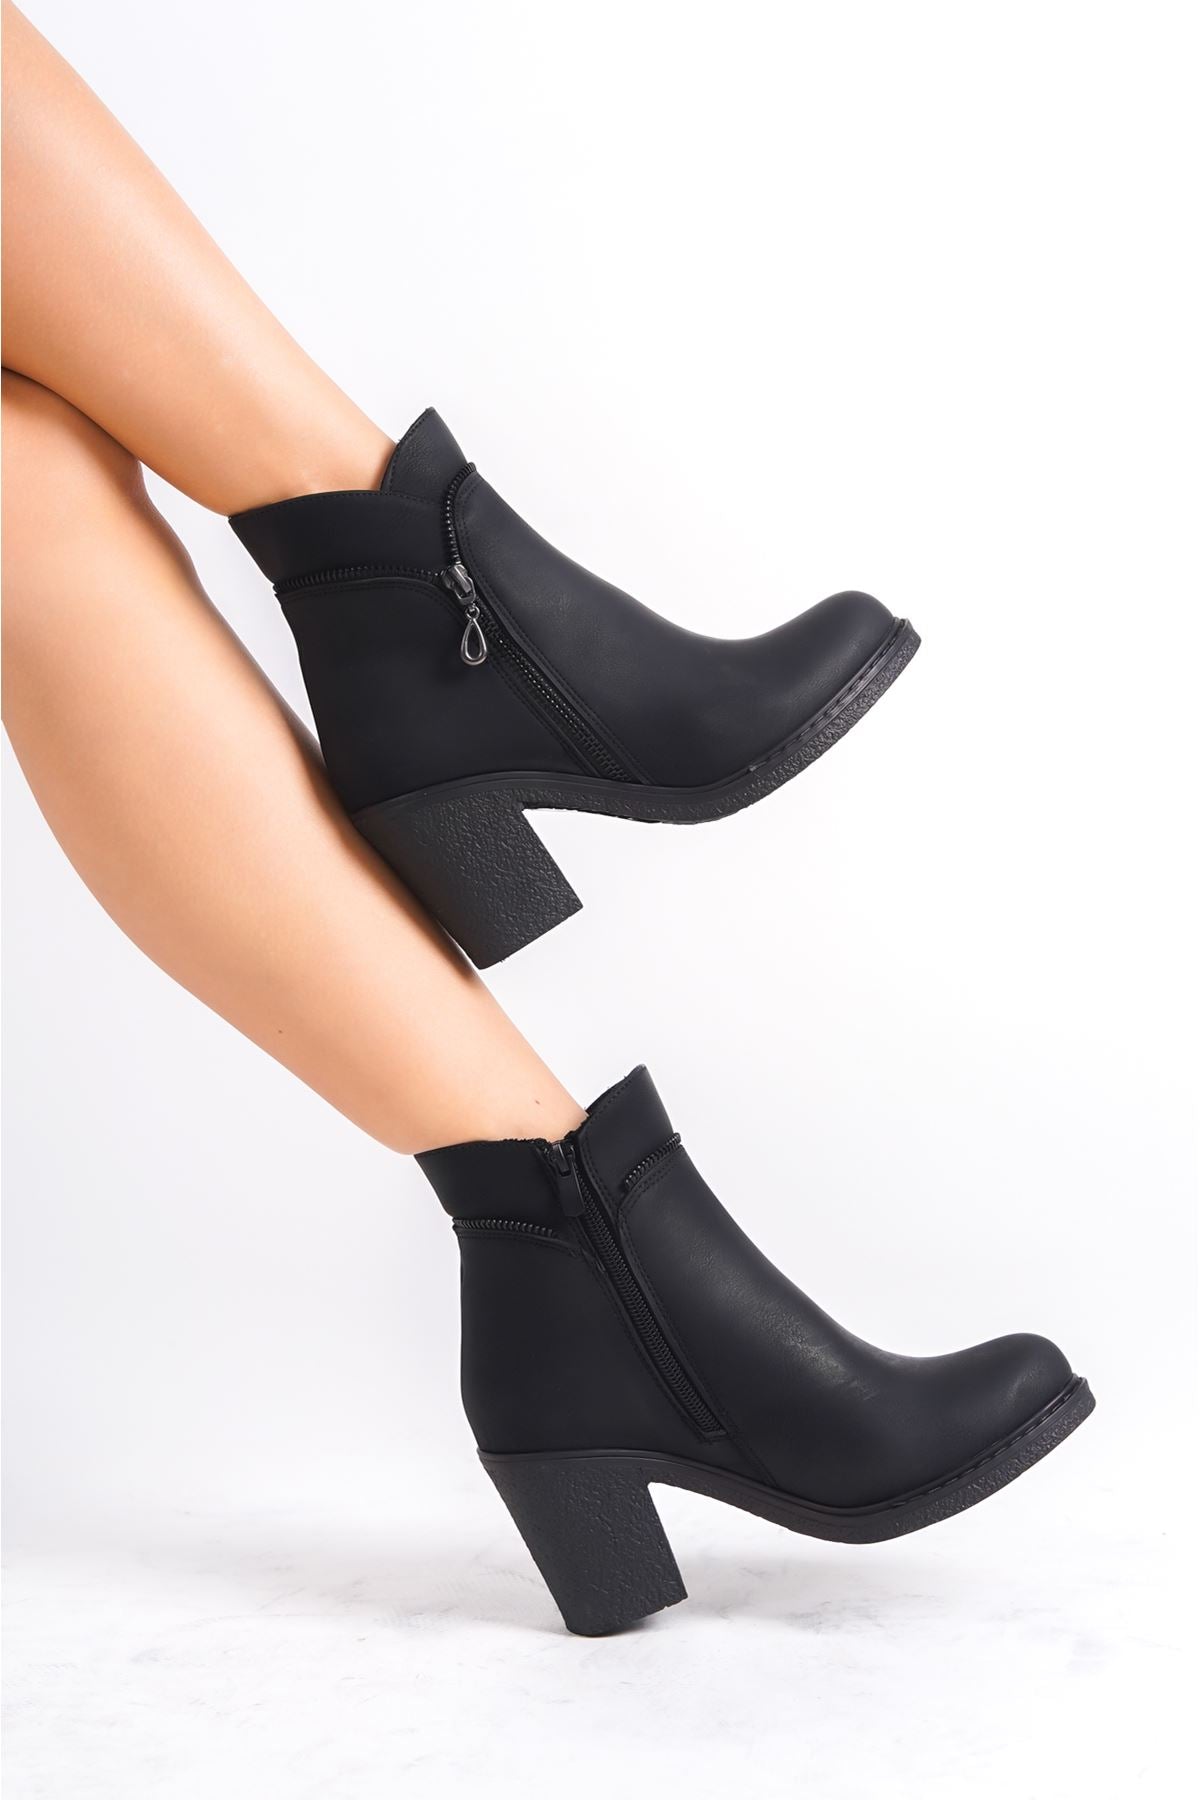 Zana Black Heeled Zippered Leather Women's Boots - STREETMODE ™